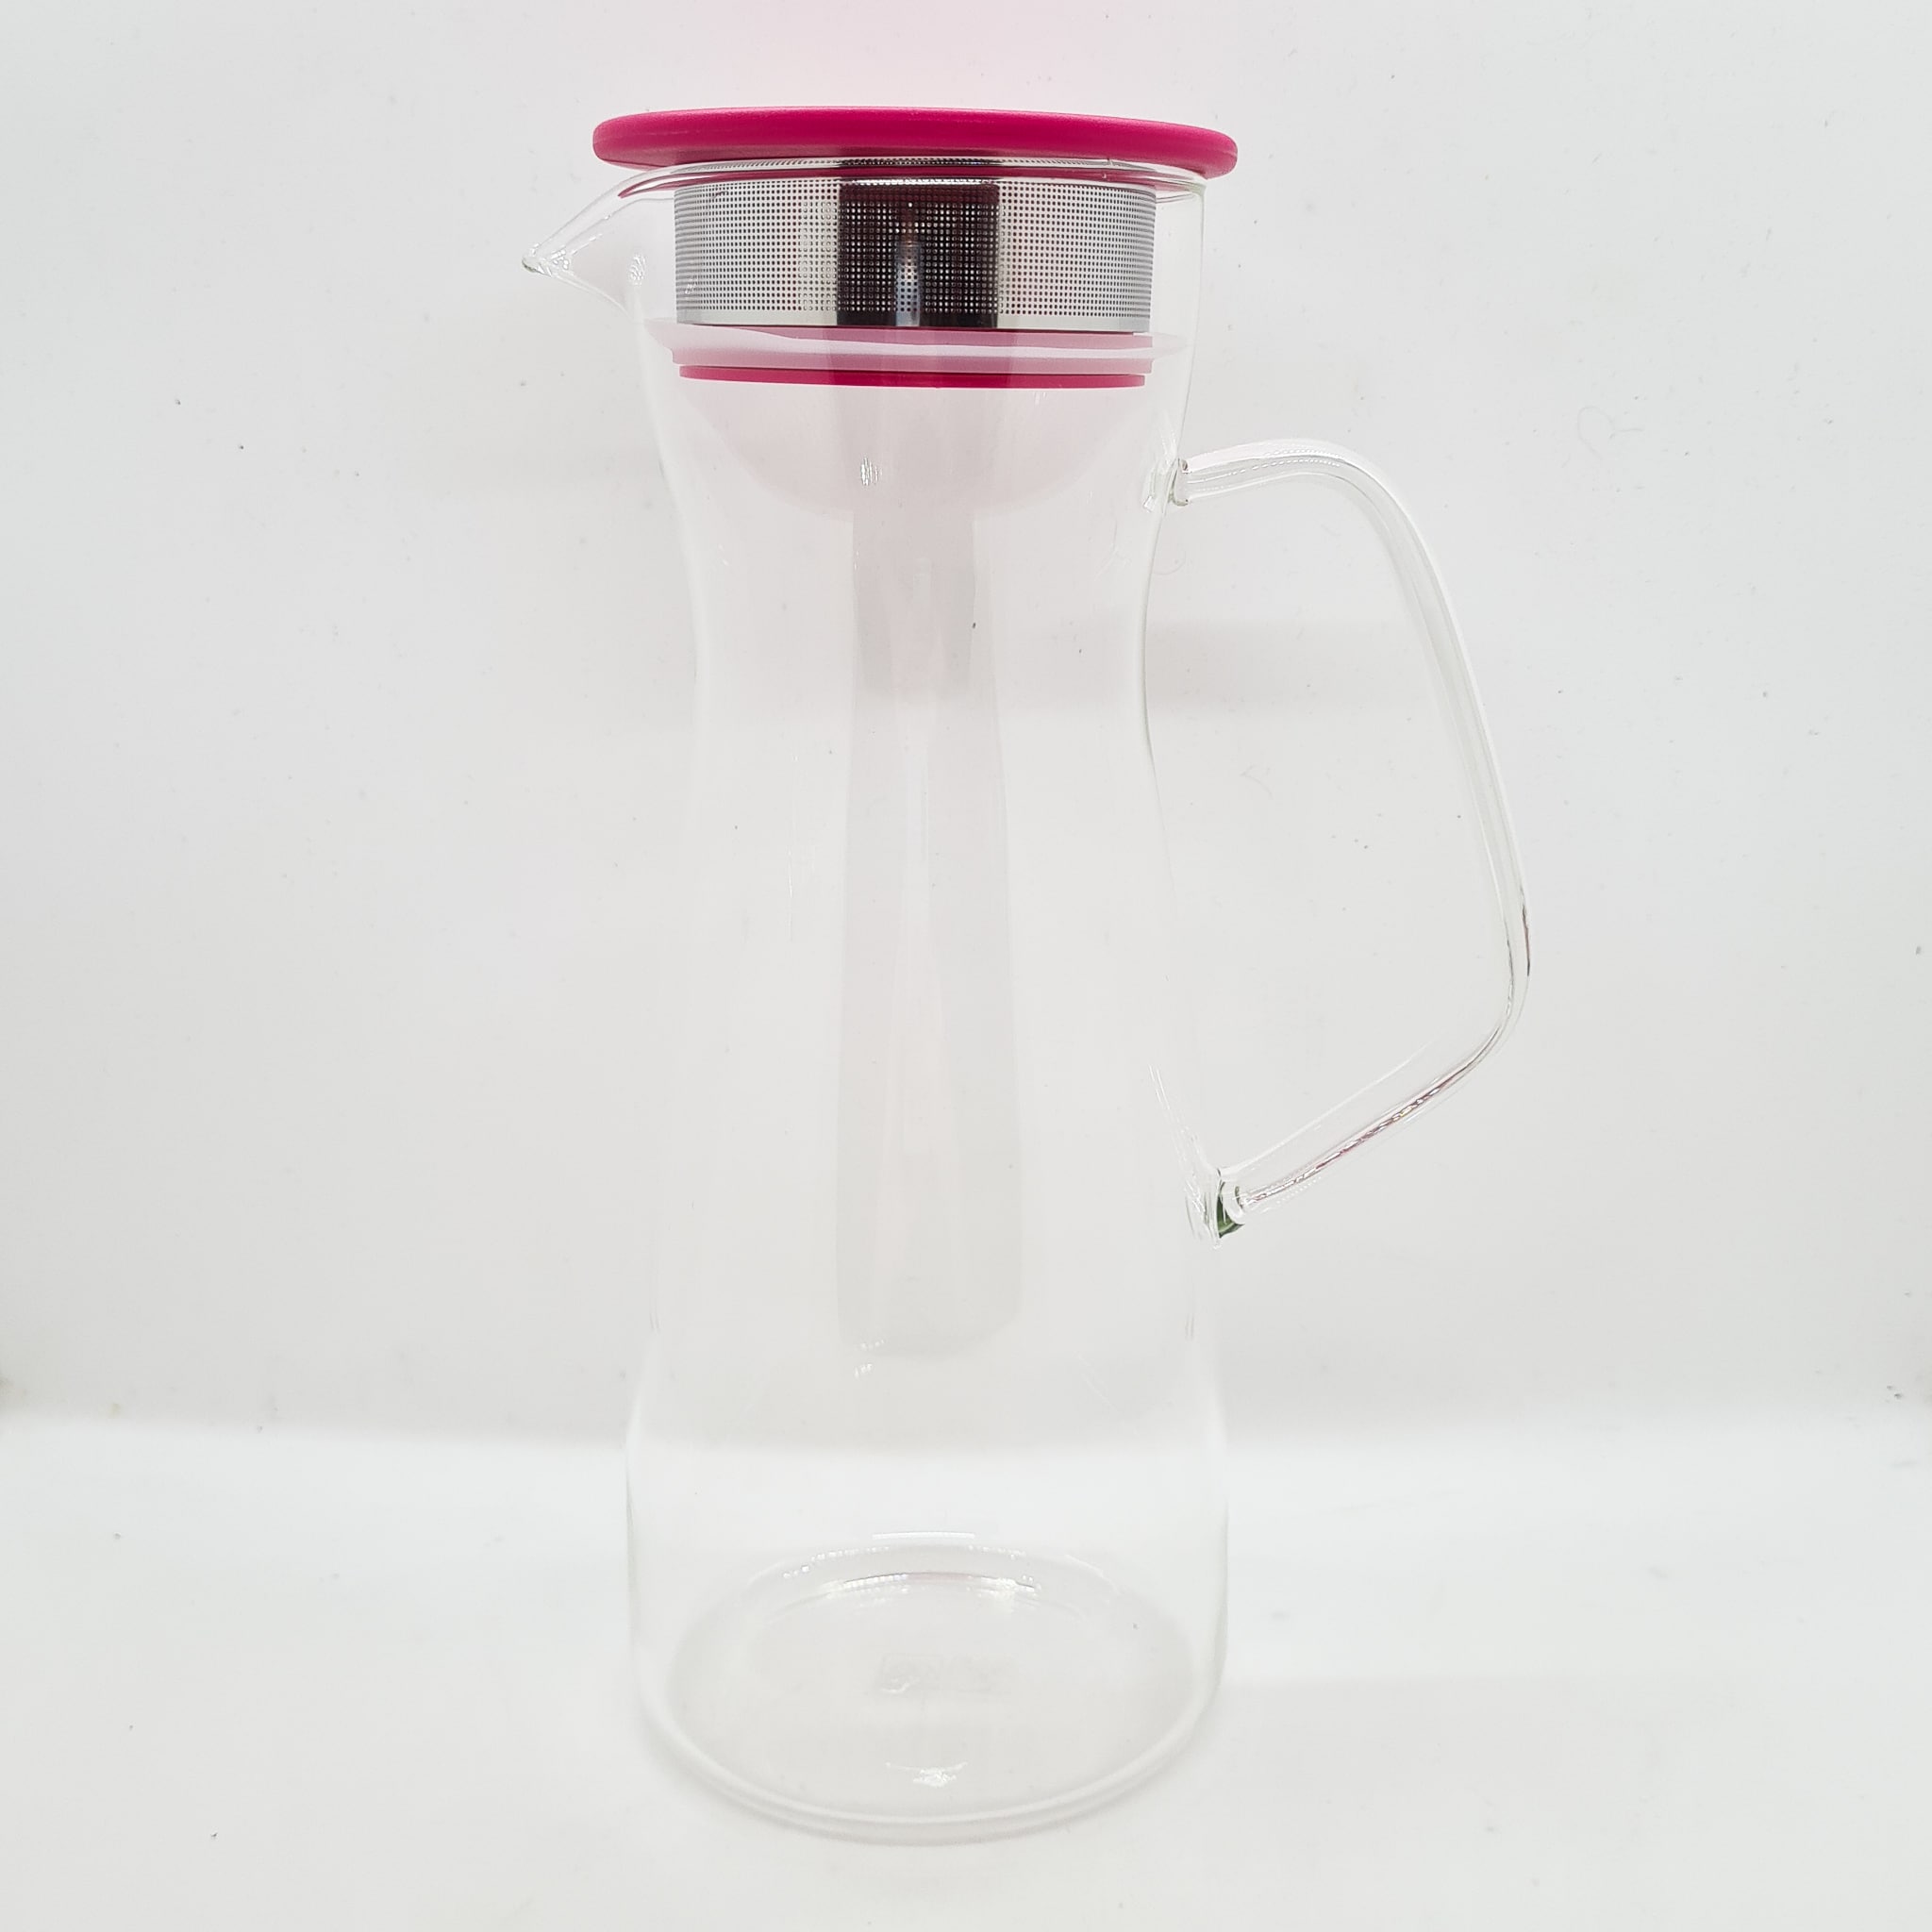 Carafe filtrante en verre pour thé glacé rose